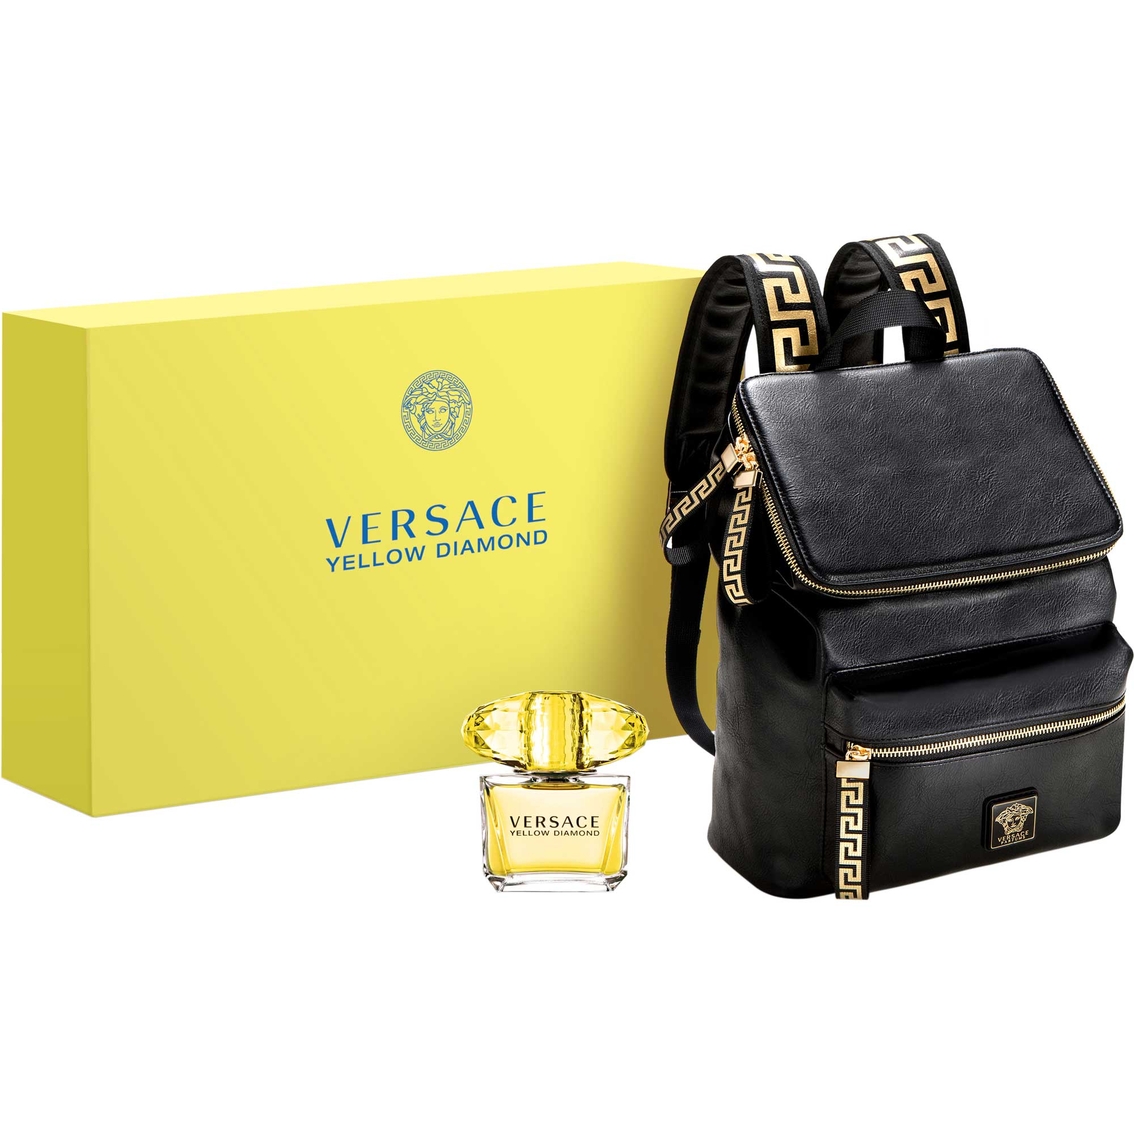 Versace Gift Set Bag | My XXX Hot Girl